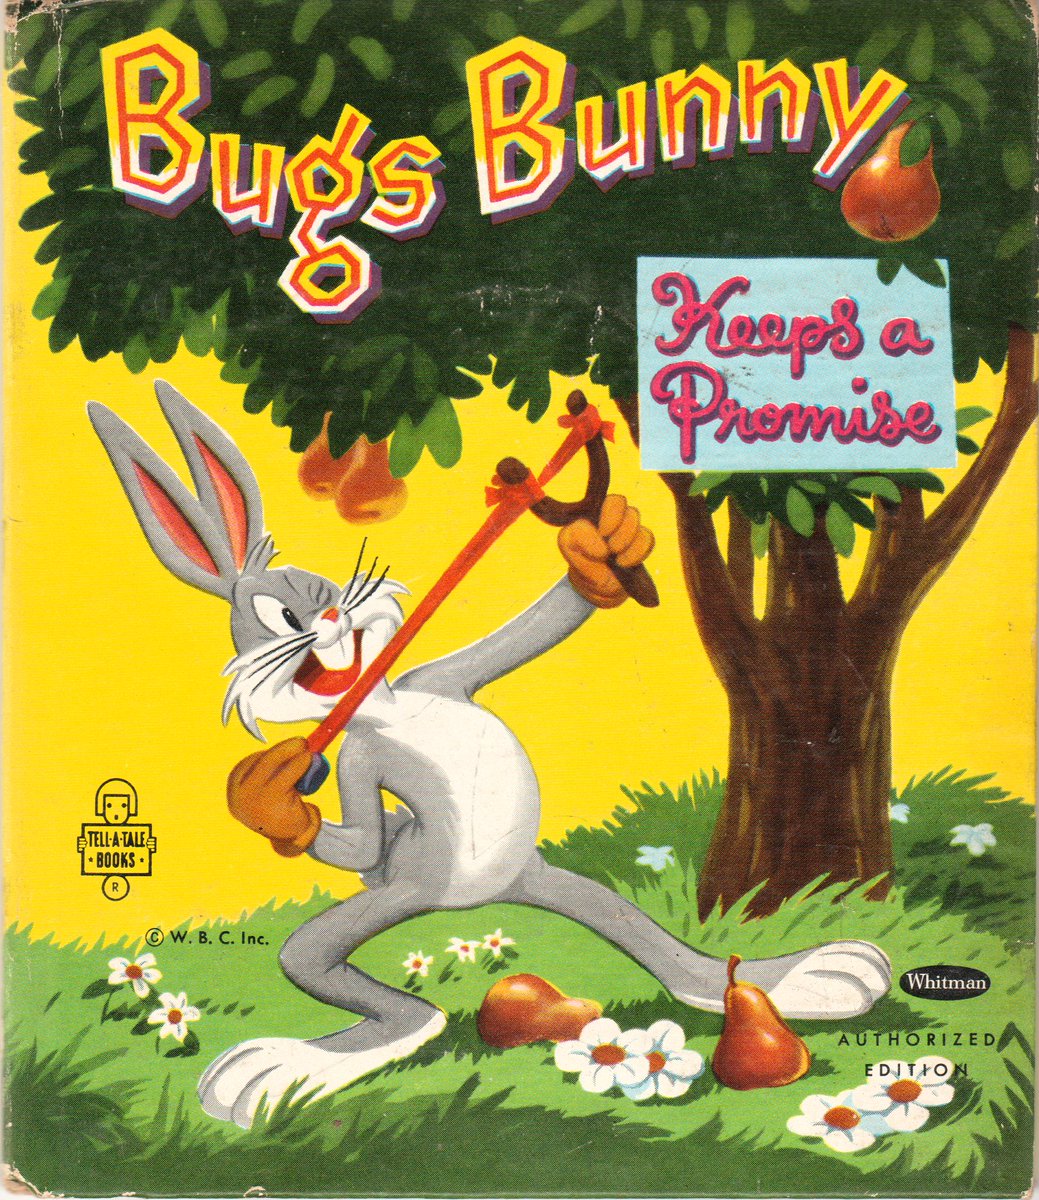 #BugsBunny Whitman Tell-A-Tale book. #cartoons